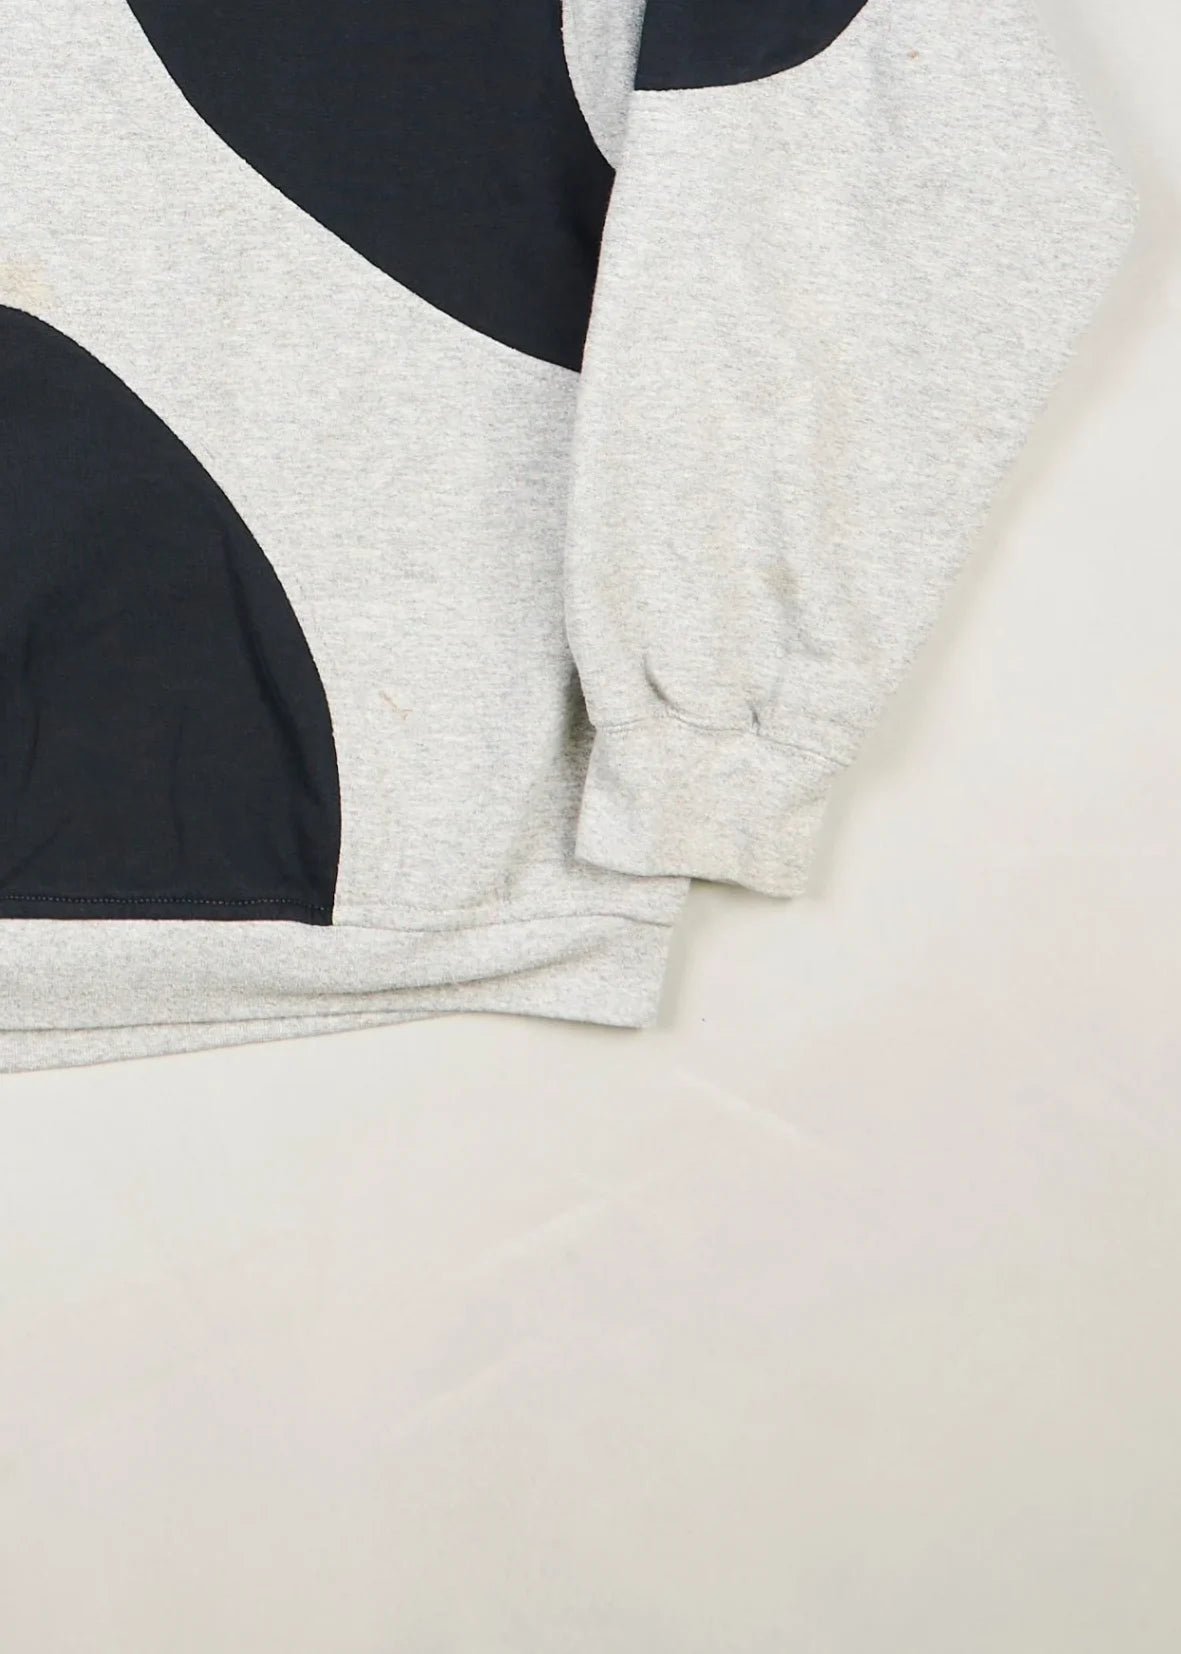 Adidas - Sweatshirt (M) Bottom Right